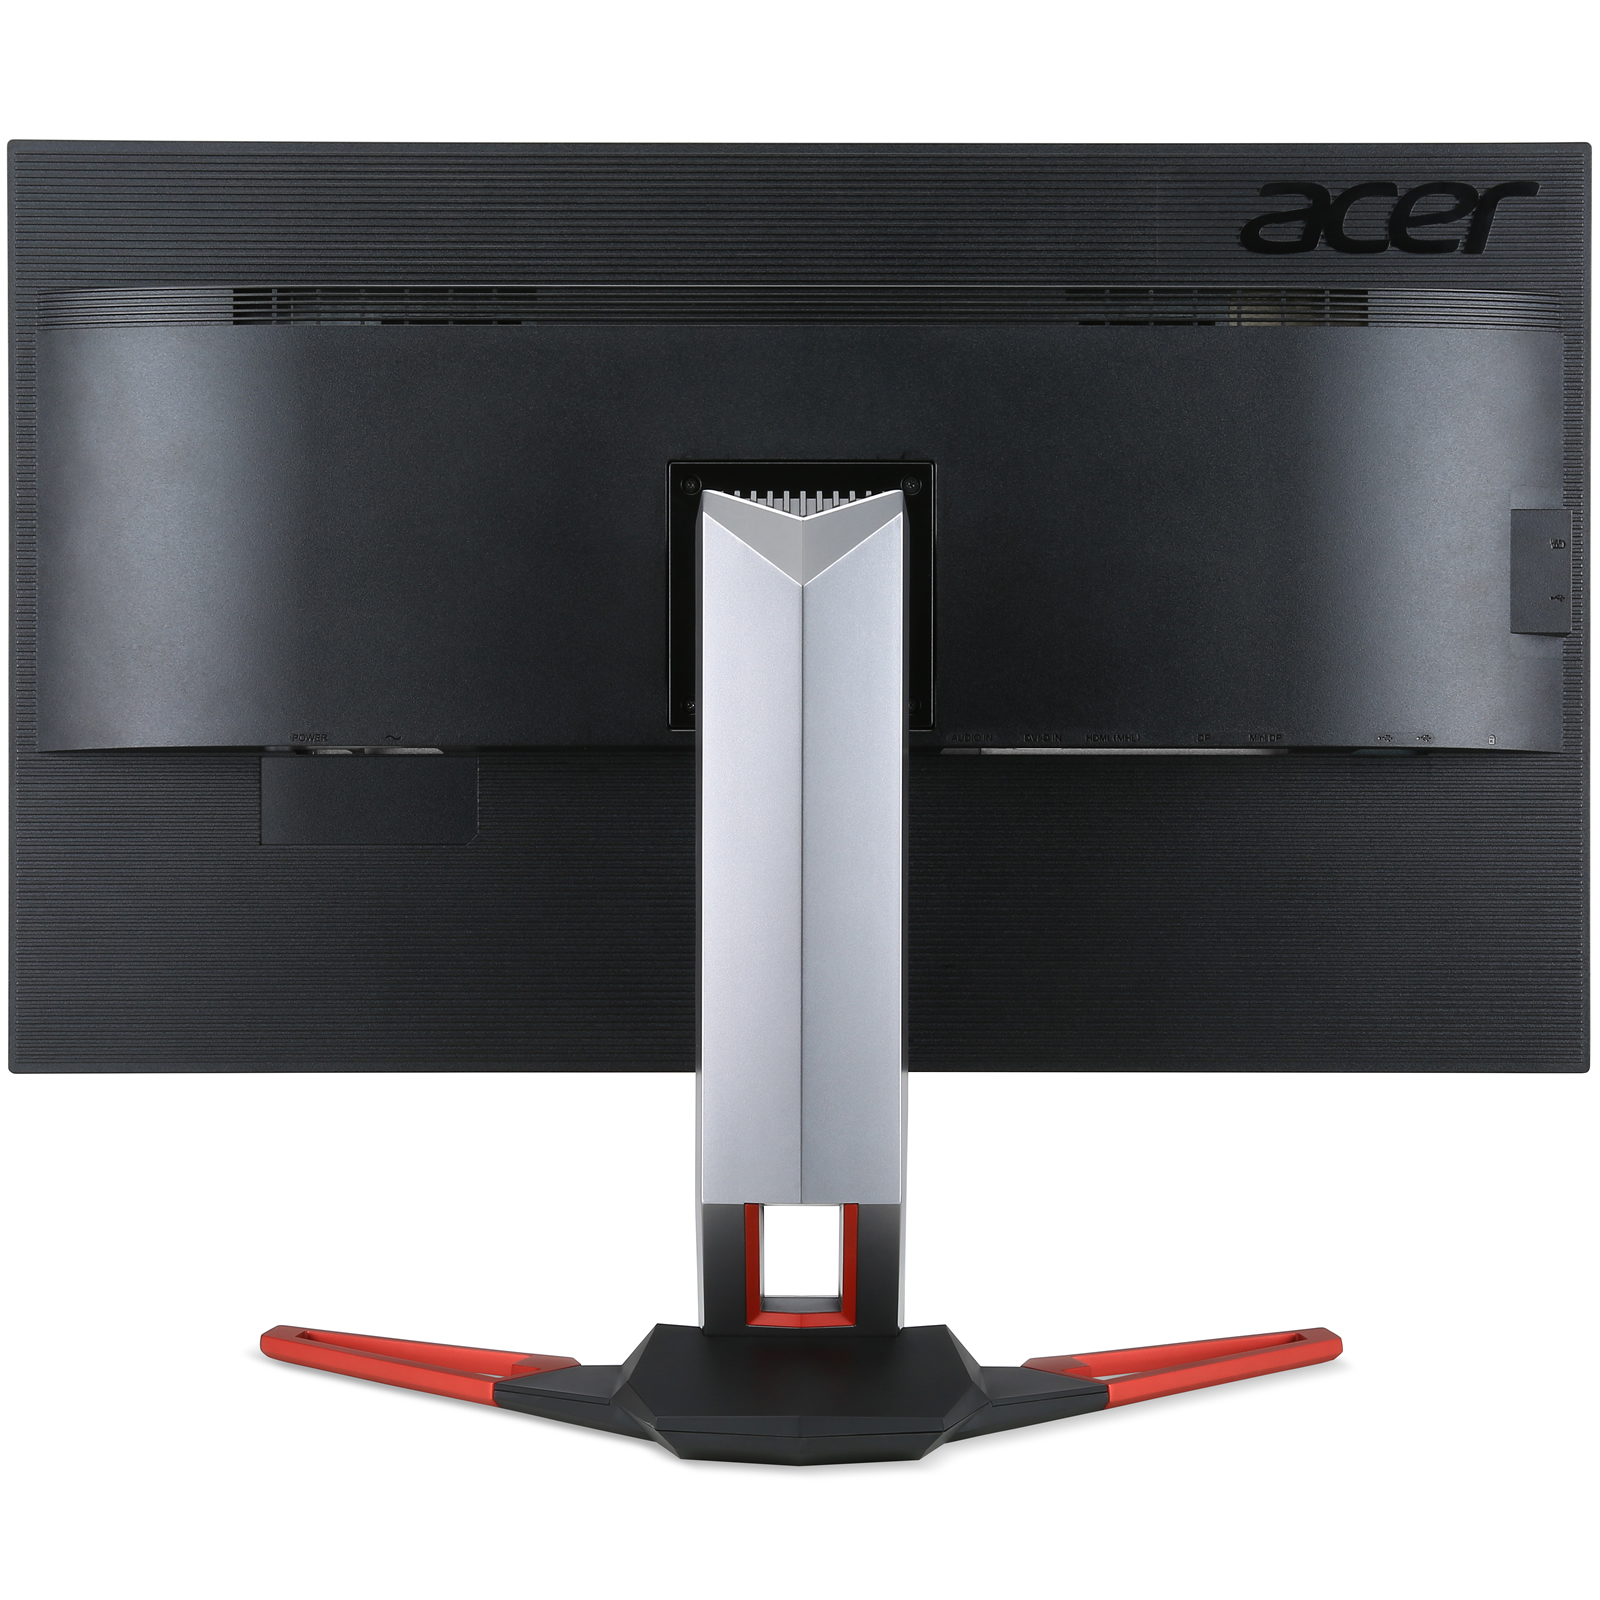 Acer - Acer Predator 4k XB321HK 32 3840x2160 IPS G-Sync Gaming Widescreen LED Moni